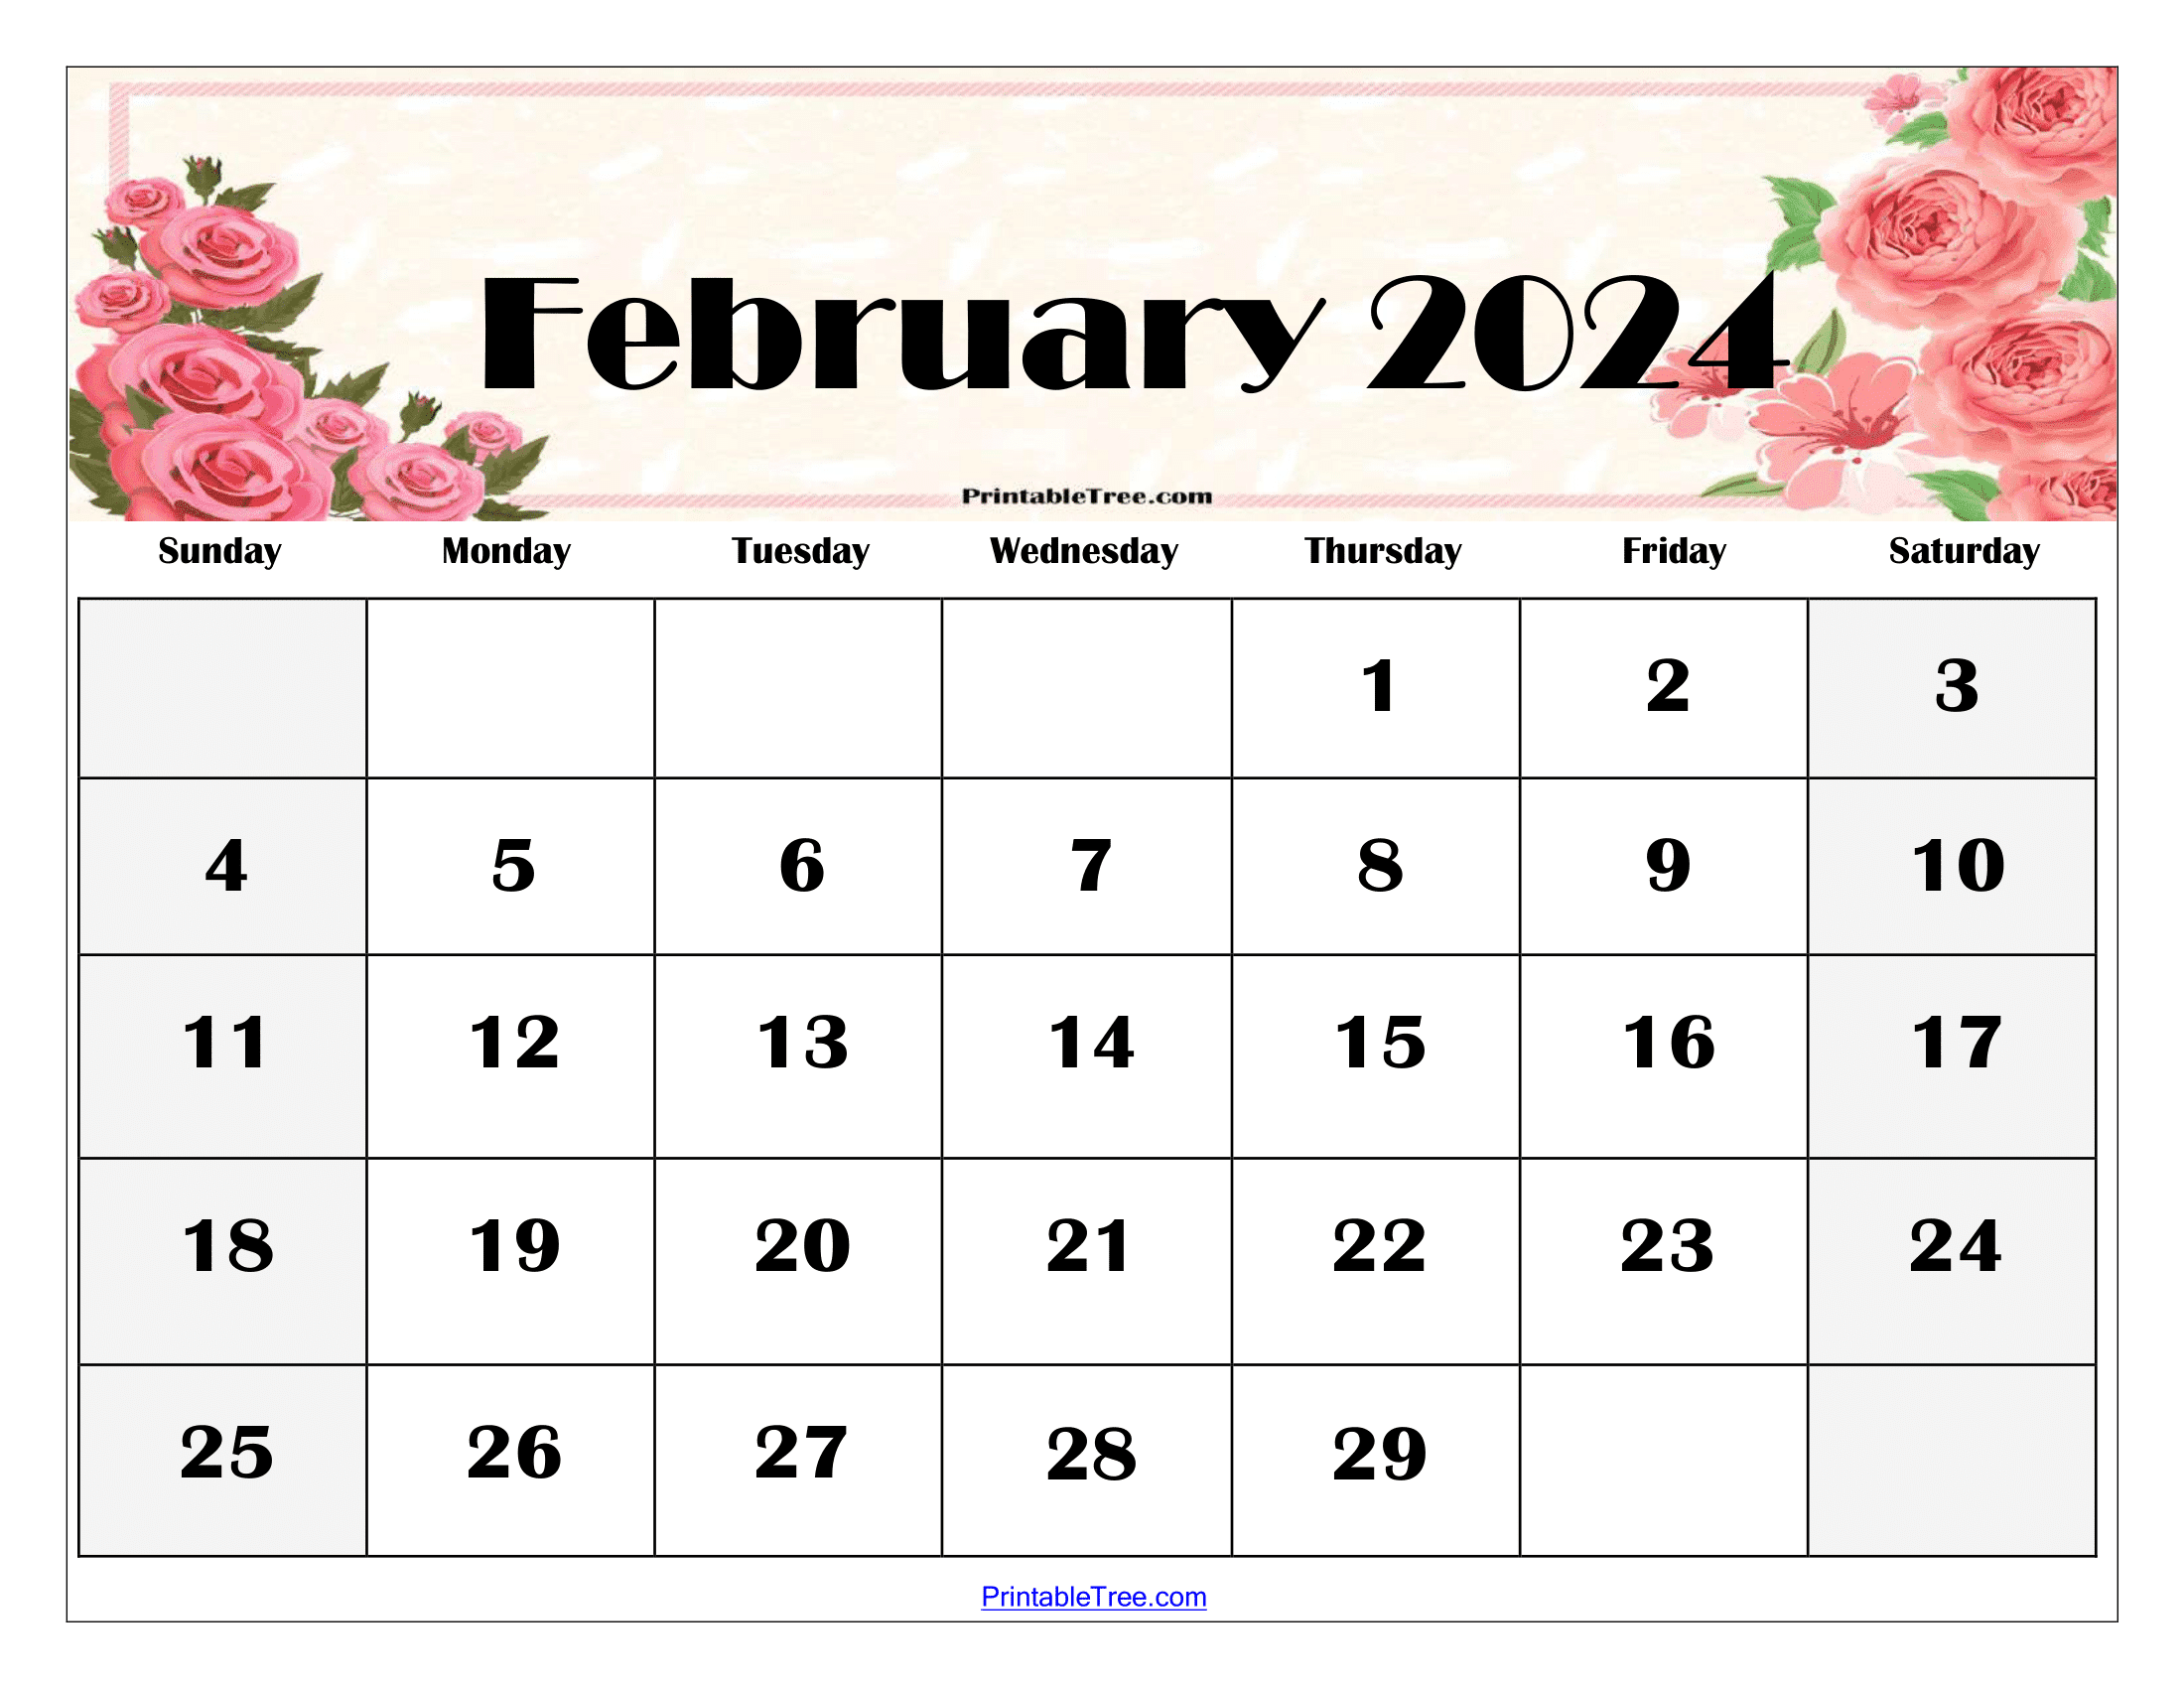 2024 February Calendar Printable With Holidays Images 2021 Dec 2024 - Free Printable 2024 February Calendar With Holidays